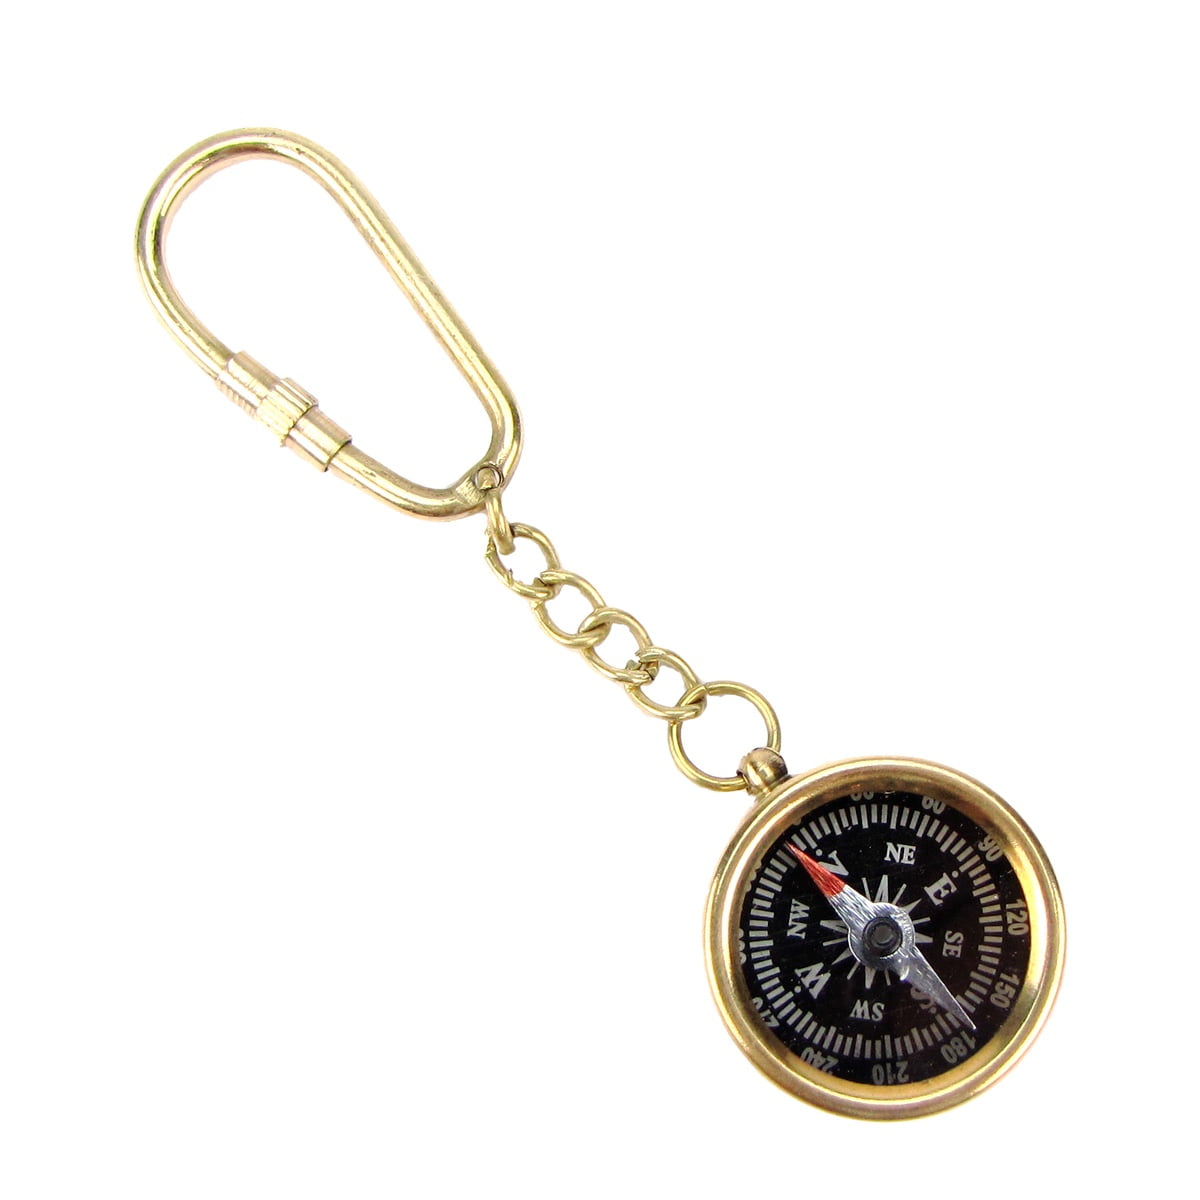 5/PCS Mini Survival Compass Camping Pocket Navigator Keychain Keytag For bags